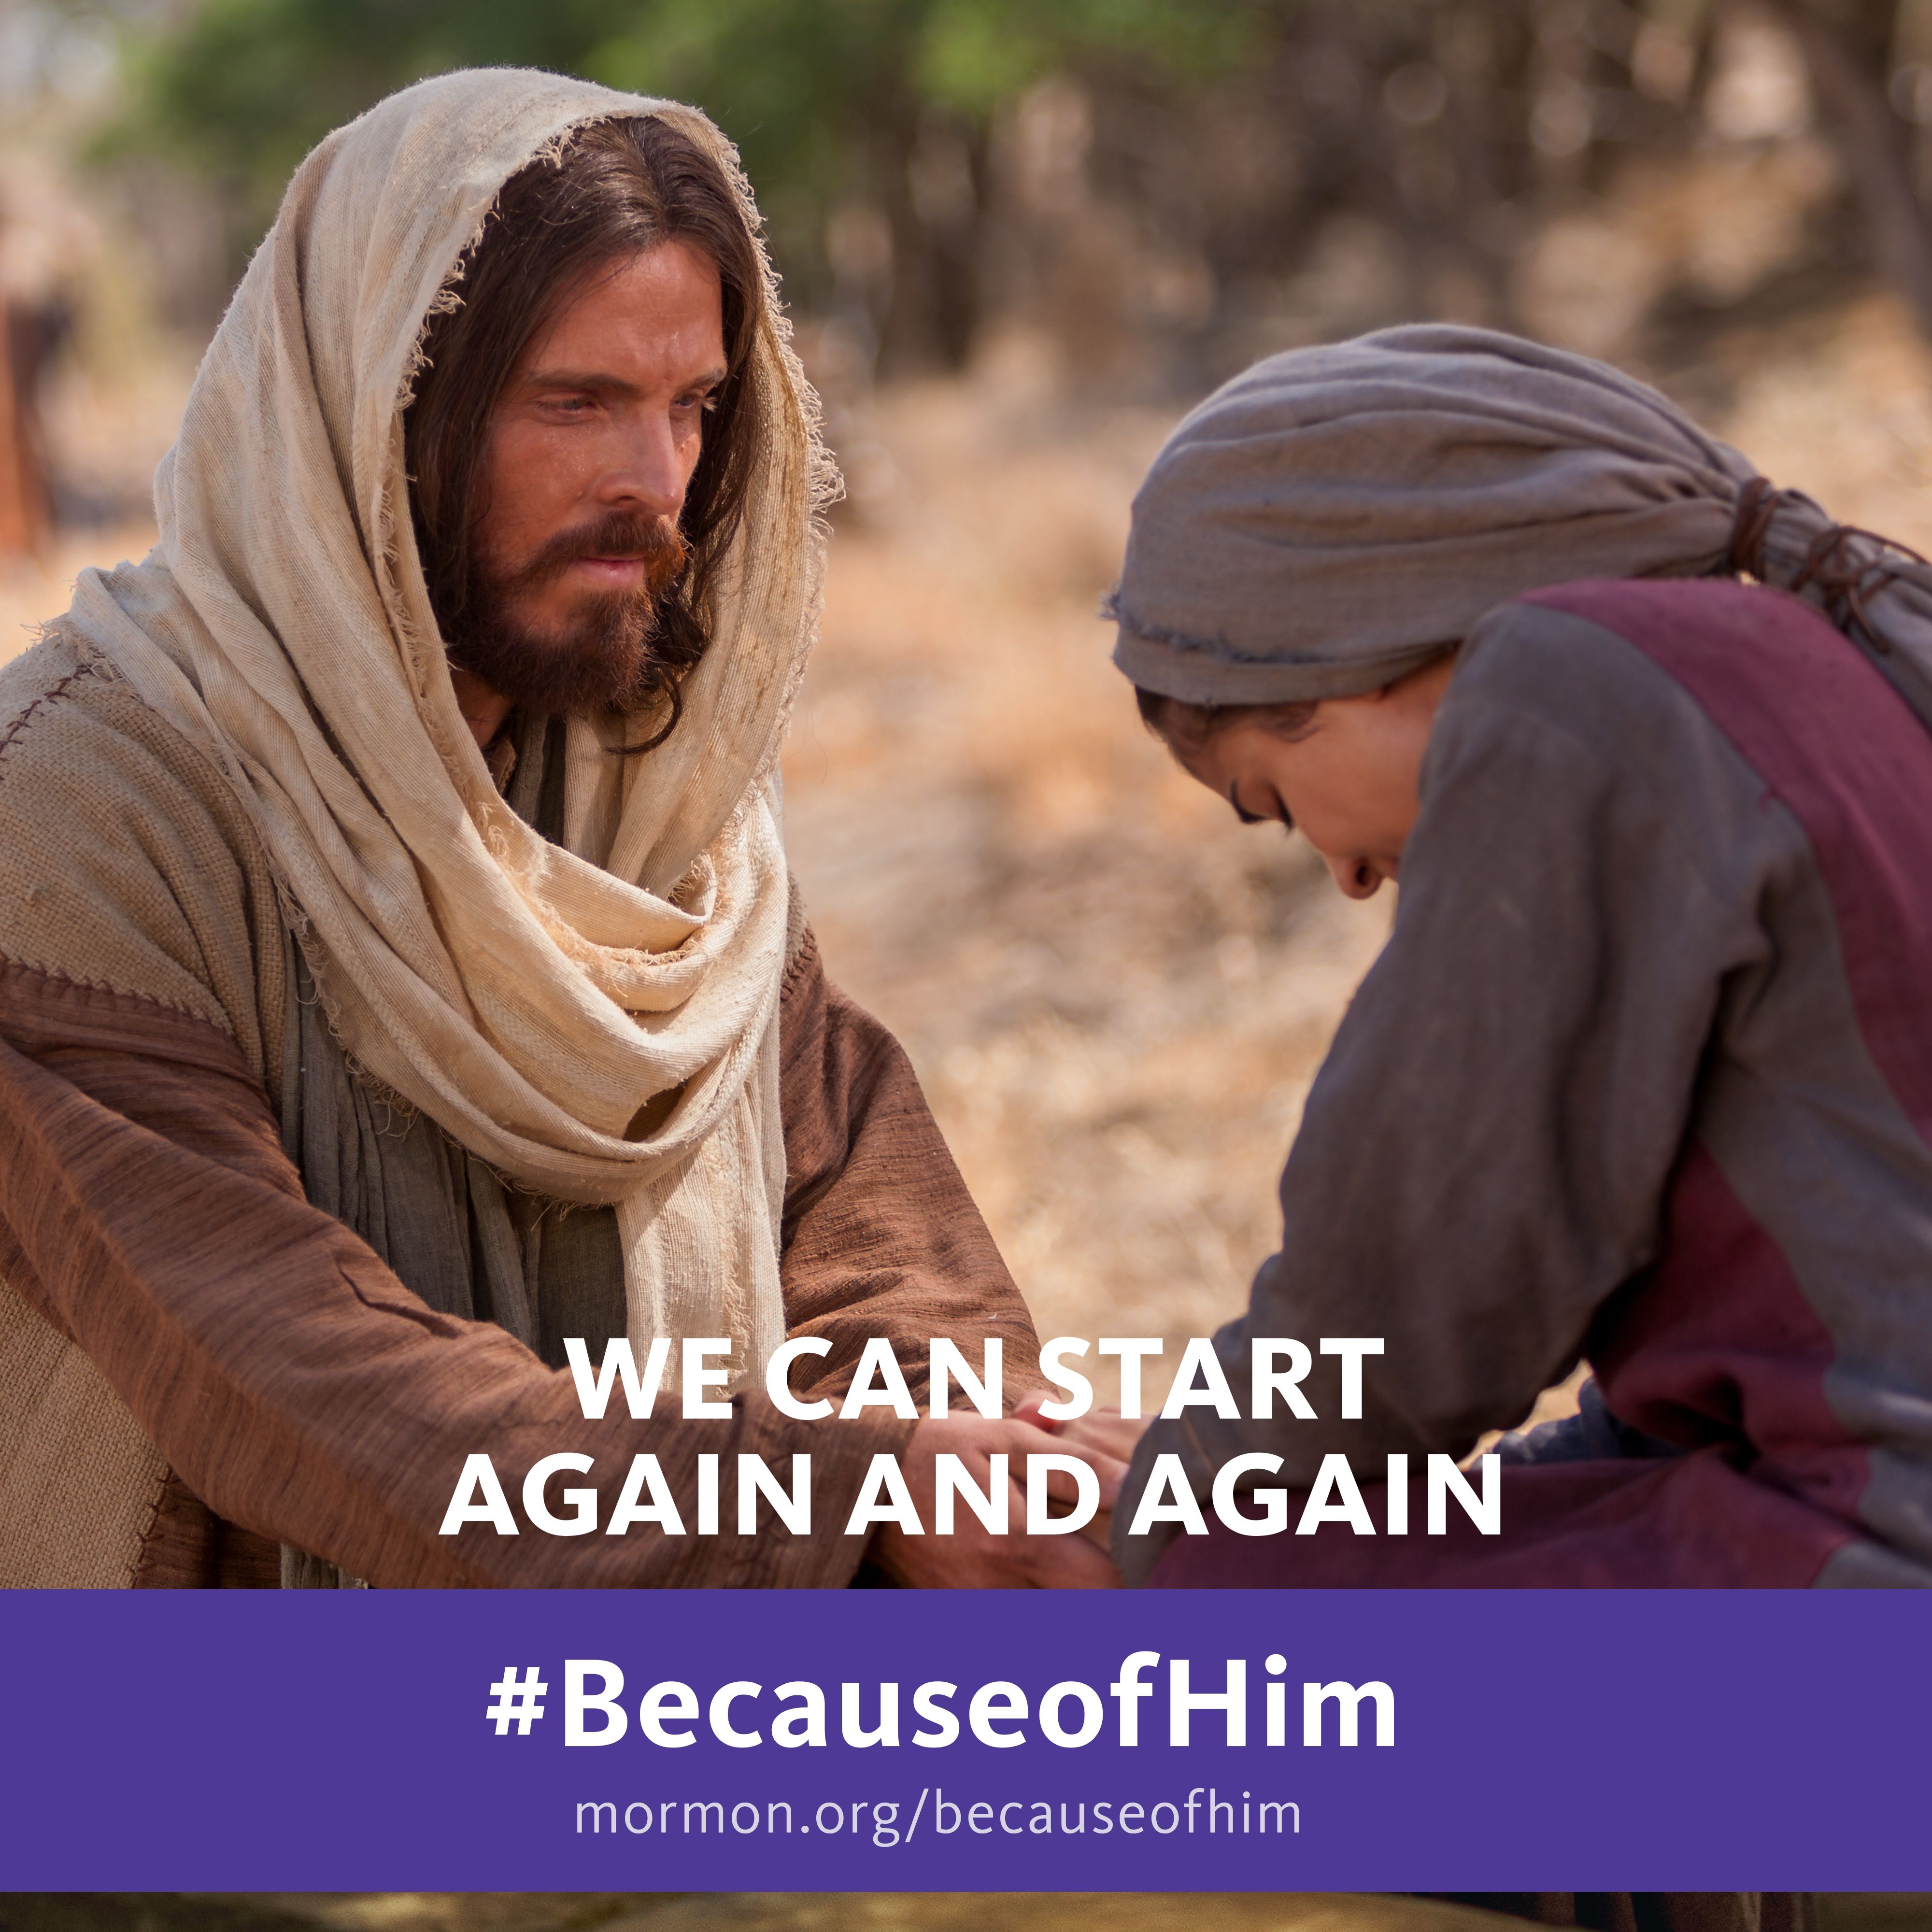 We can start again and again. #BecauseofHim, mormon.org/becauseofhim